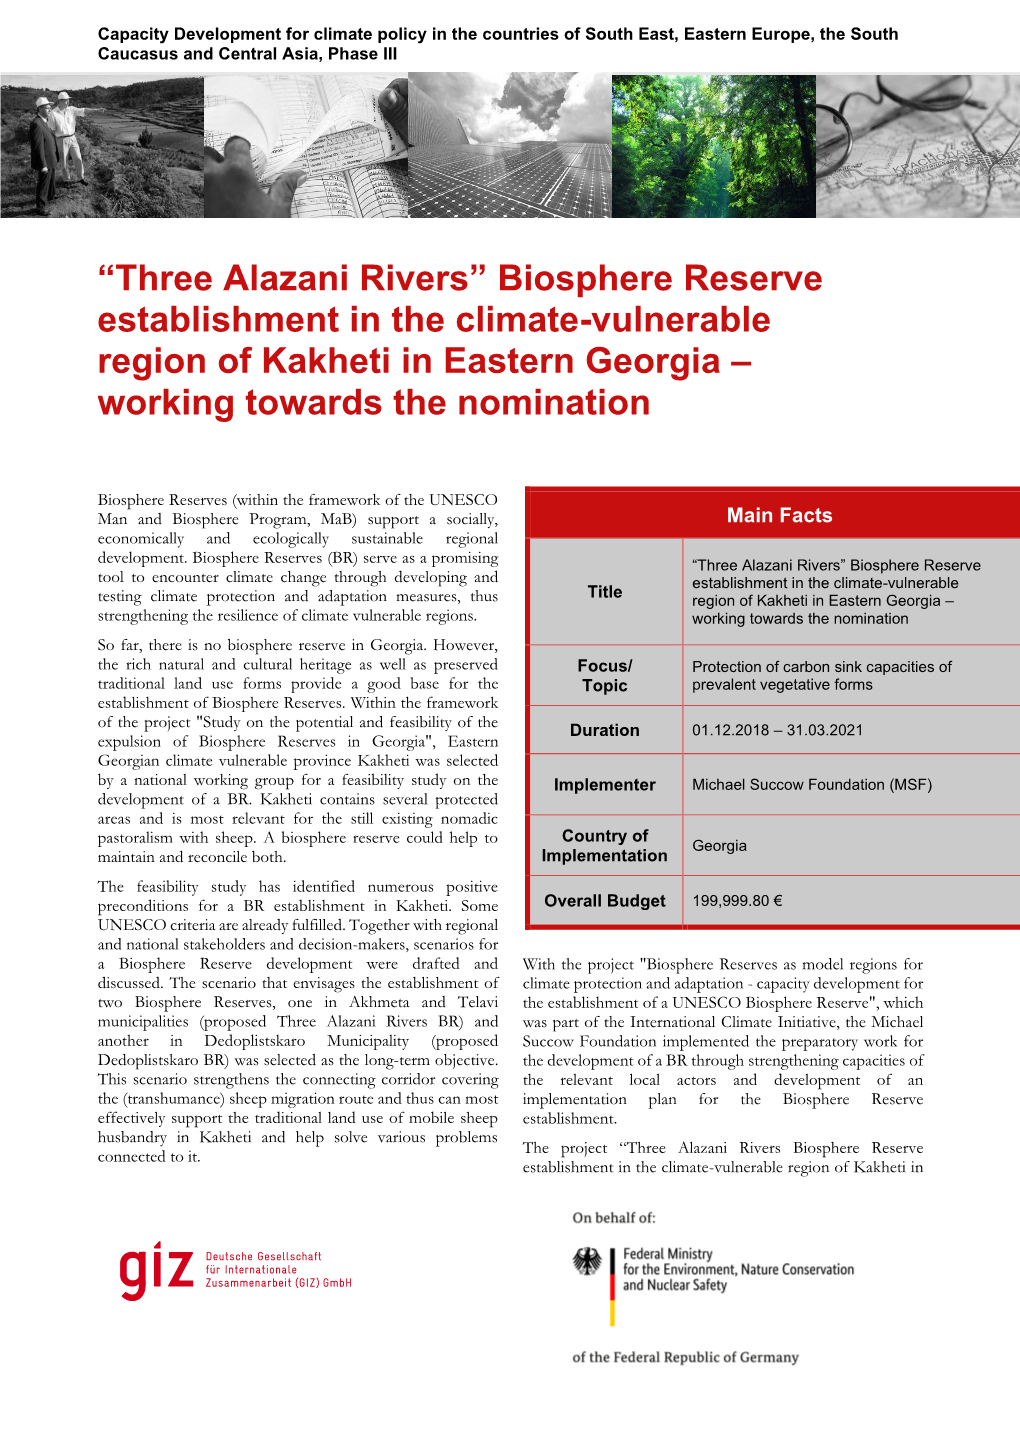 “Three Alazani Rivers” Biosphere Reserve Establishment in the Climate-Vulnerable Region of Kakheti in Eastern Georgia – Working Towards the Nomination